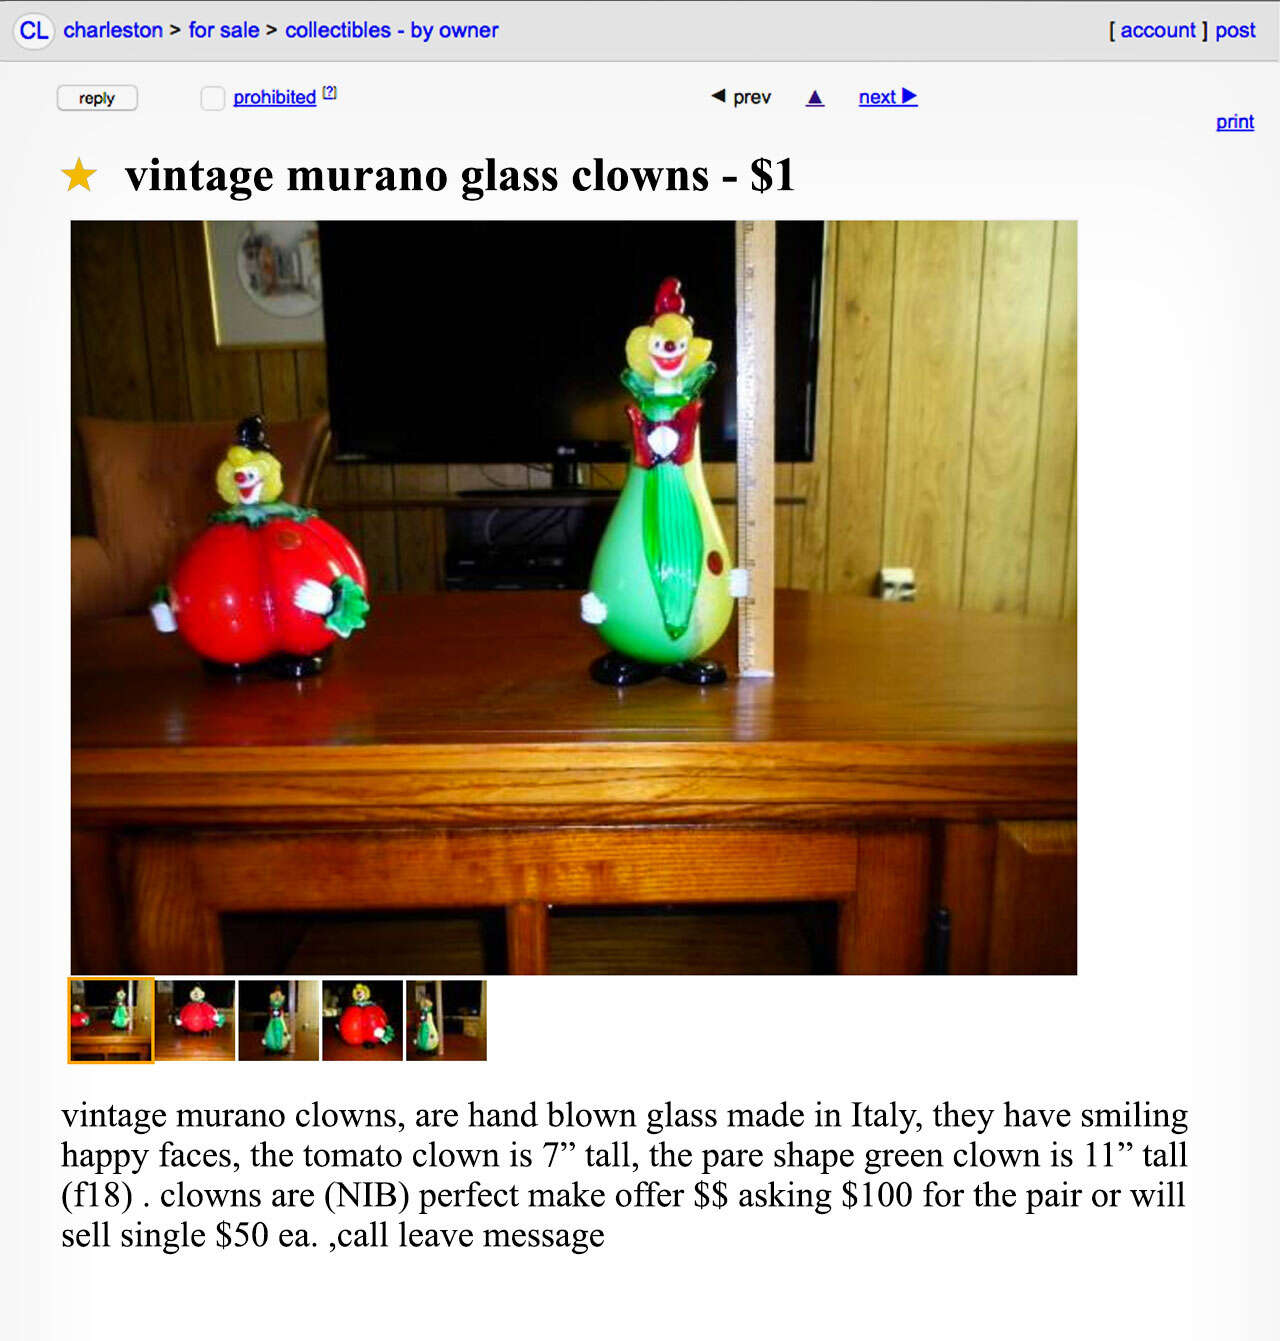 A Craigslist advertisement for vintage glass clowns. 